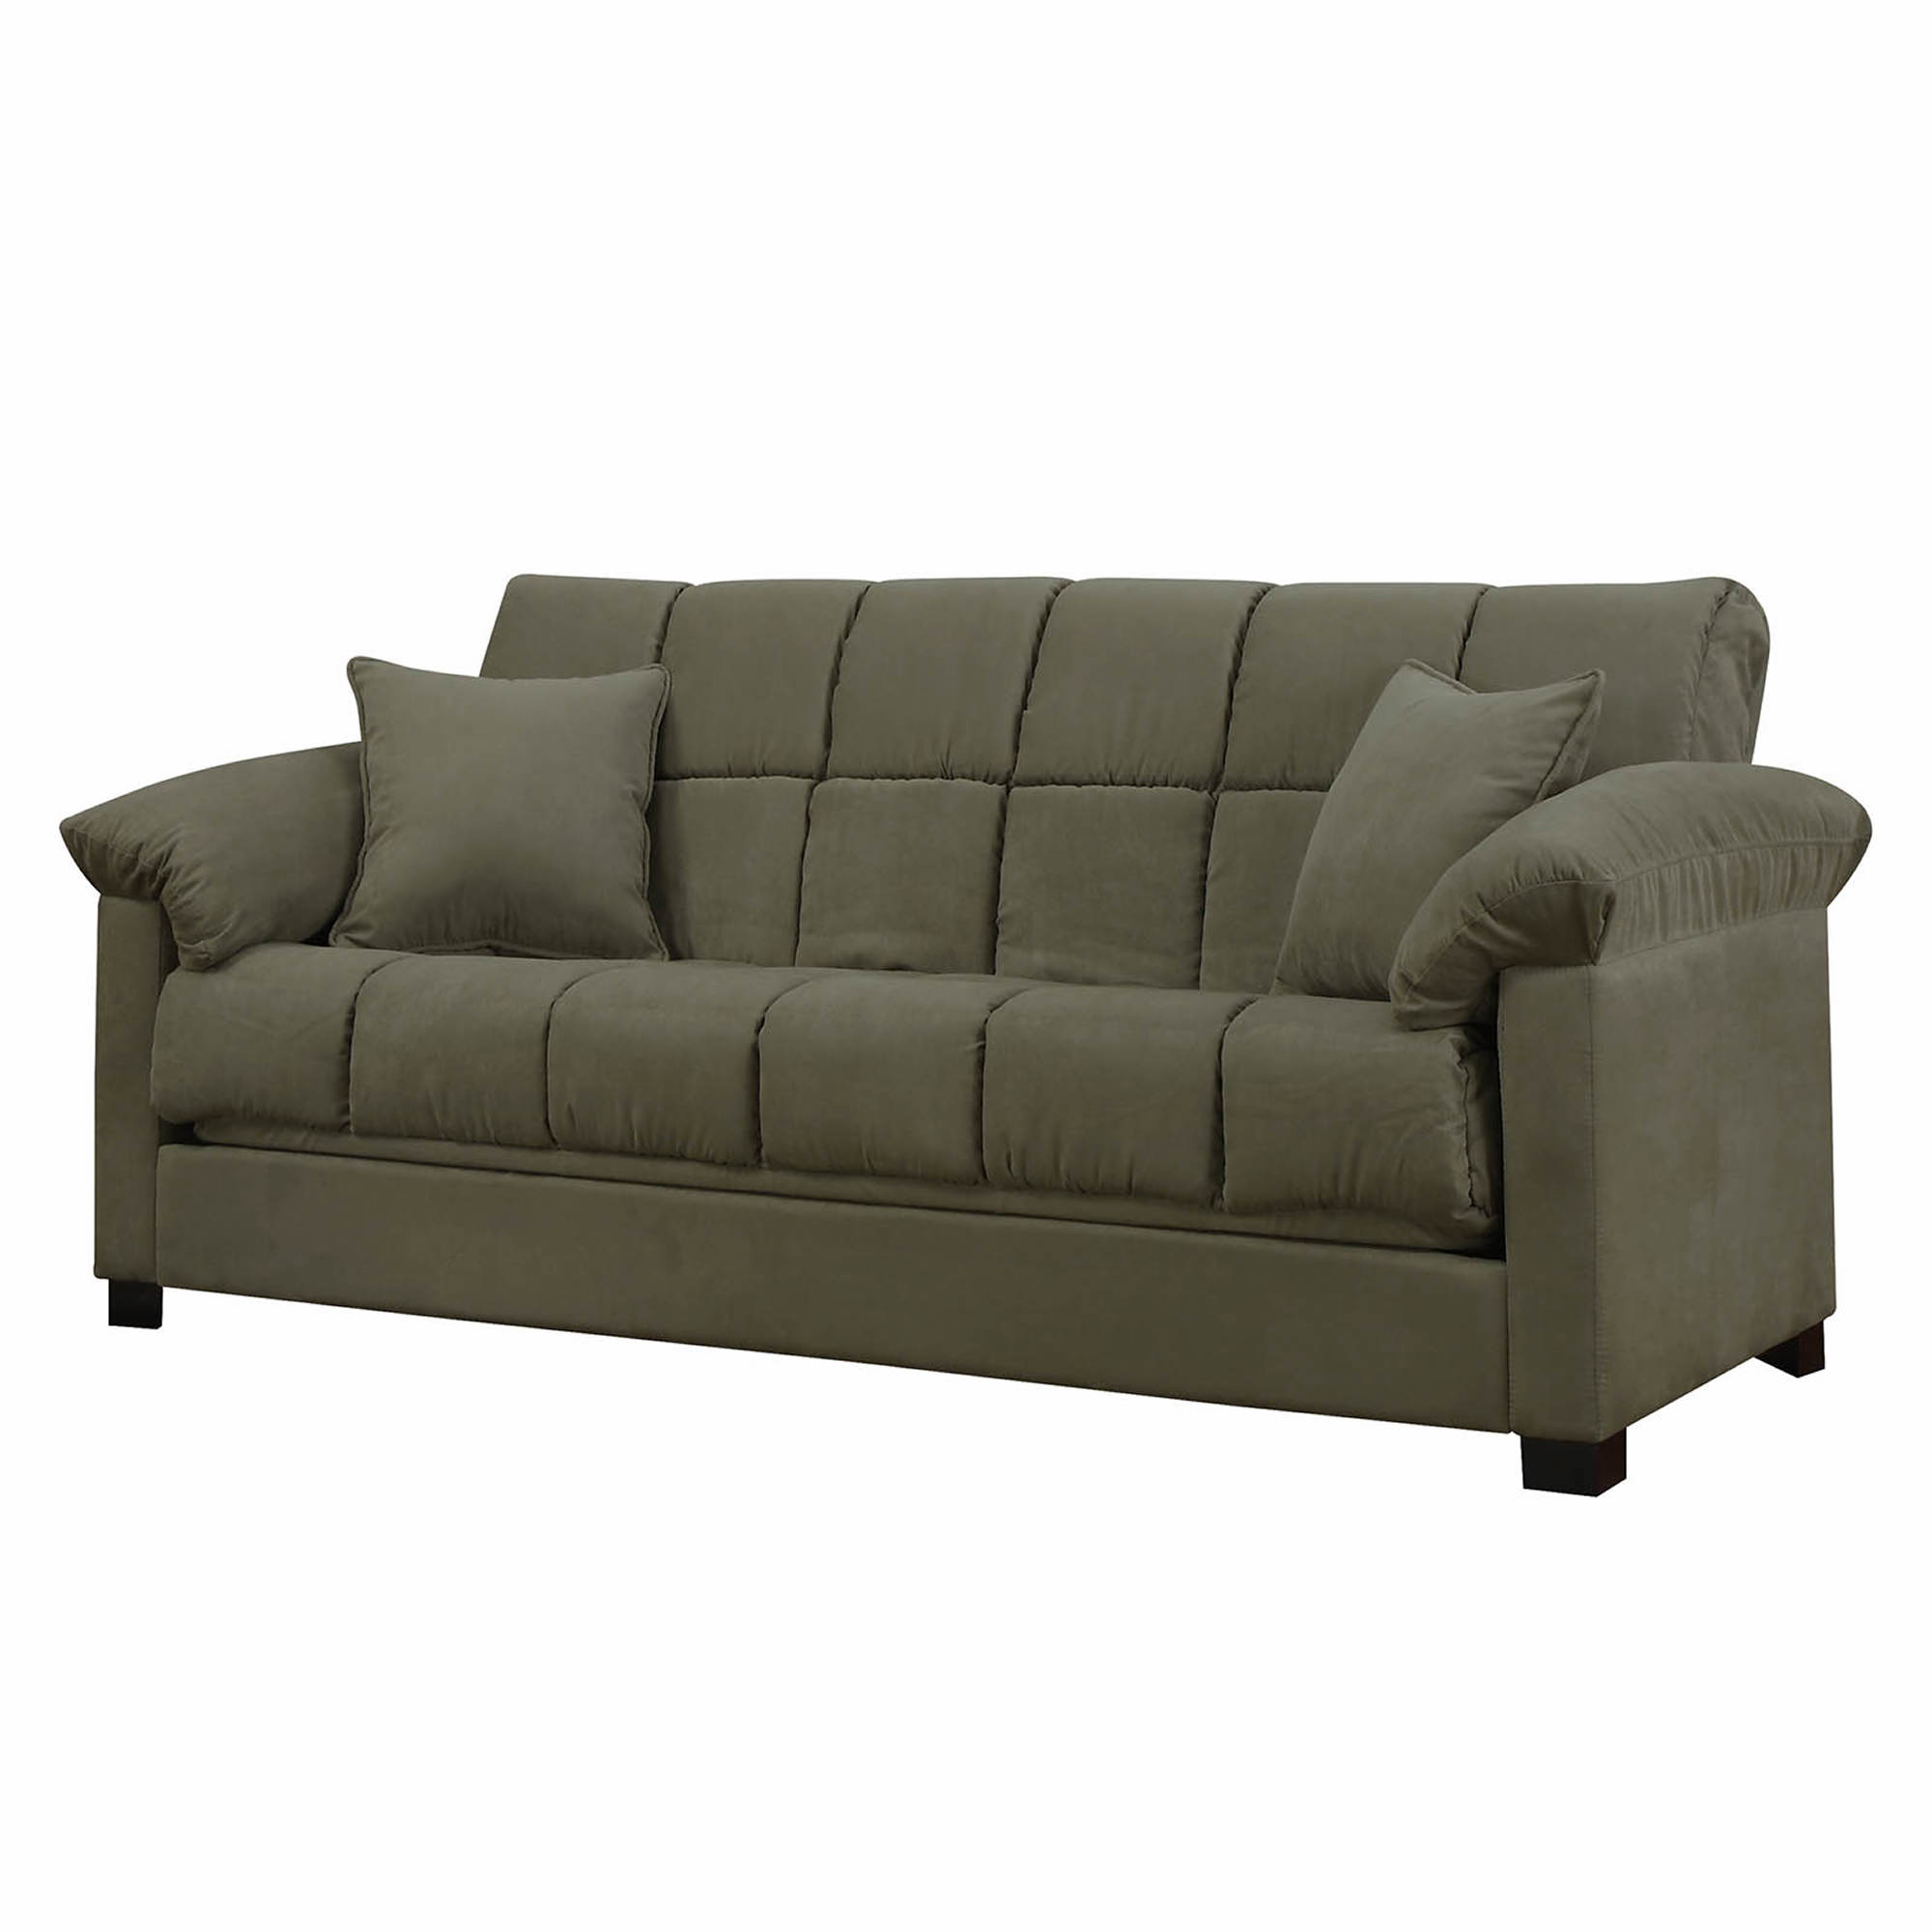 Handy Living ConvertaCouch FullSize Sleeper Sofa Sage